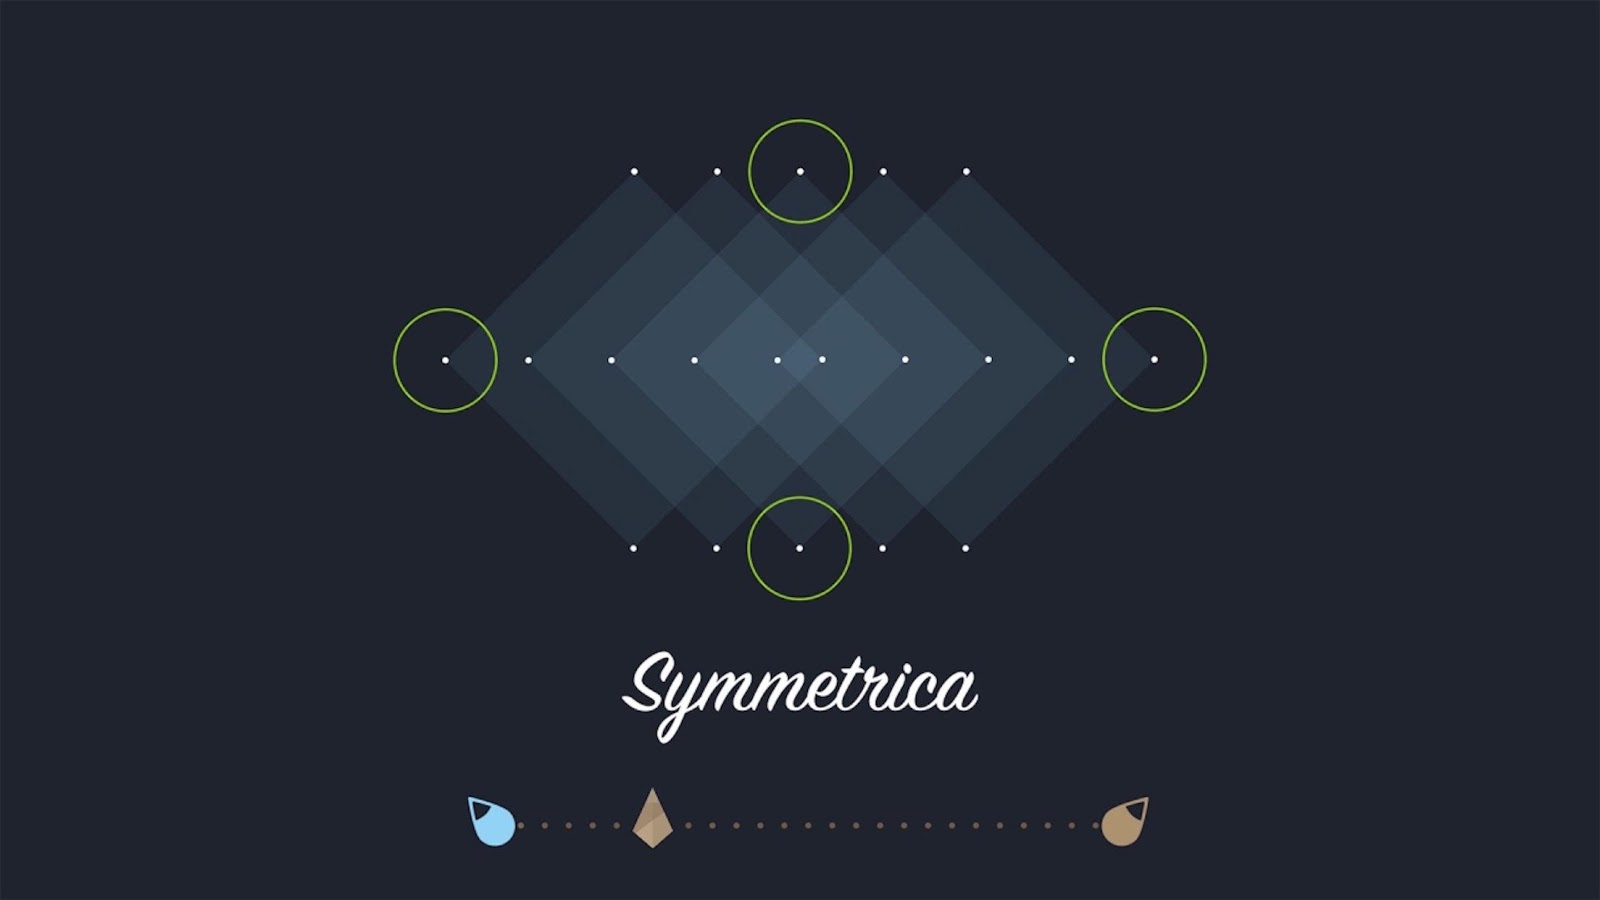    Symmetrica Premium- screenshot  